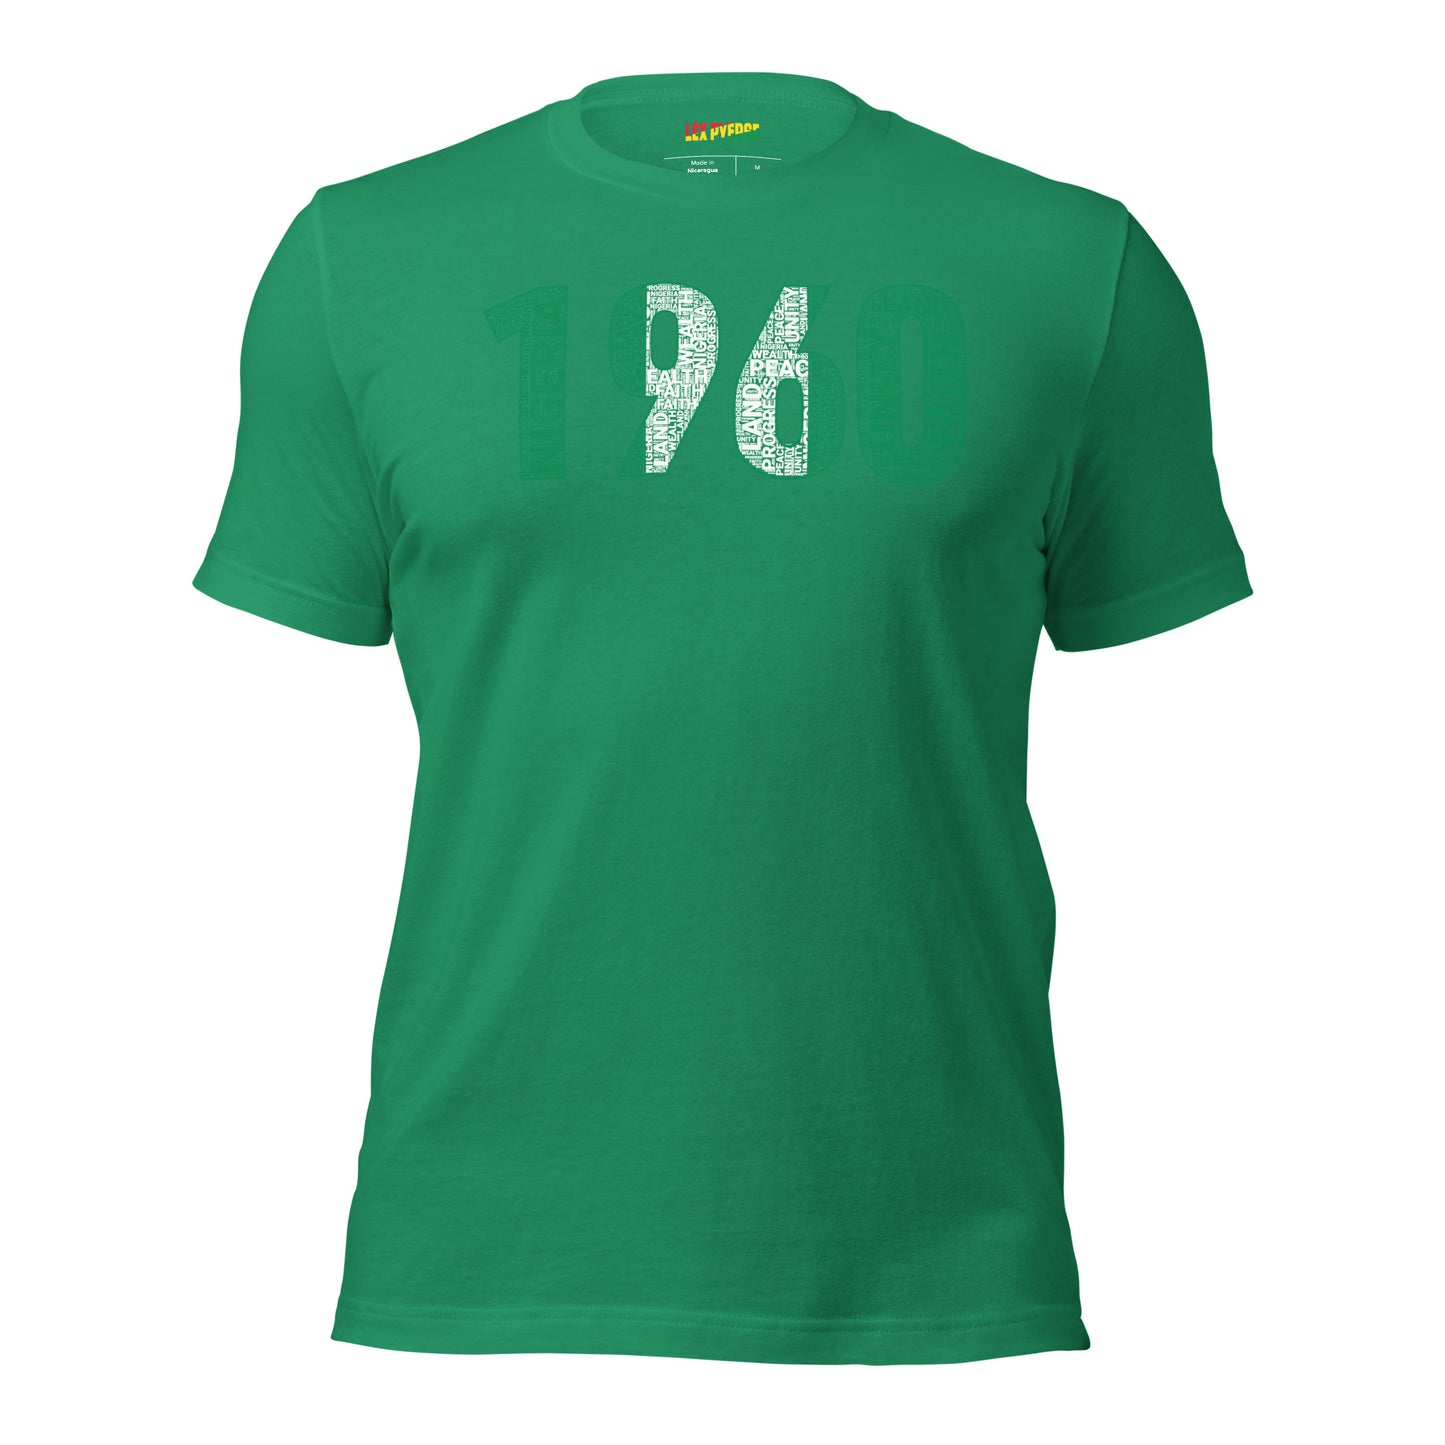 1960 Nigeria Independence Year Word Cluster Tee Short-Sleeve Unisex T-Shirt